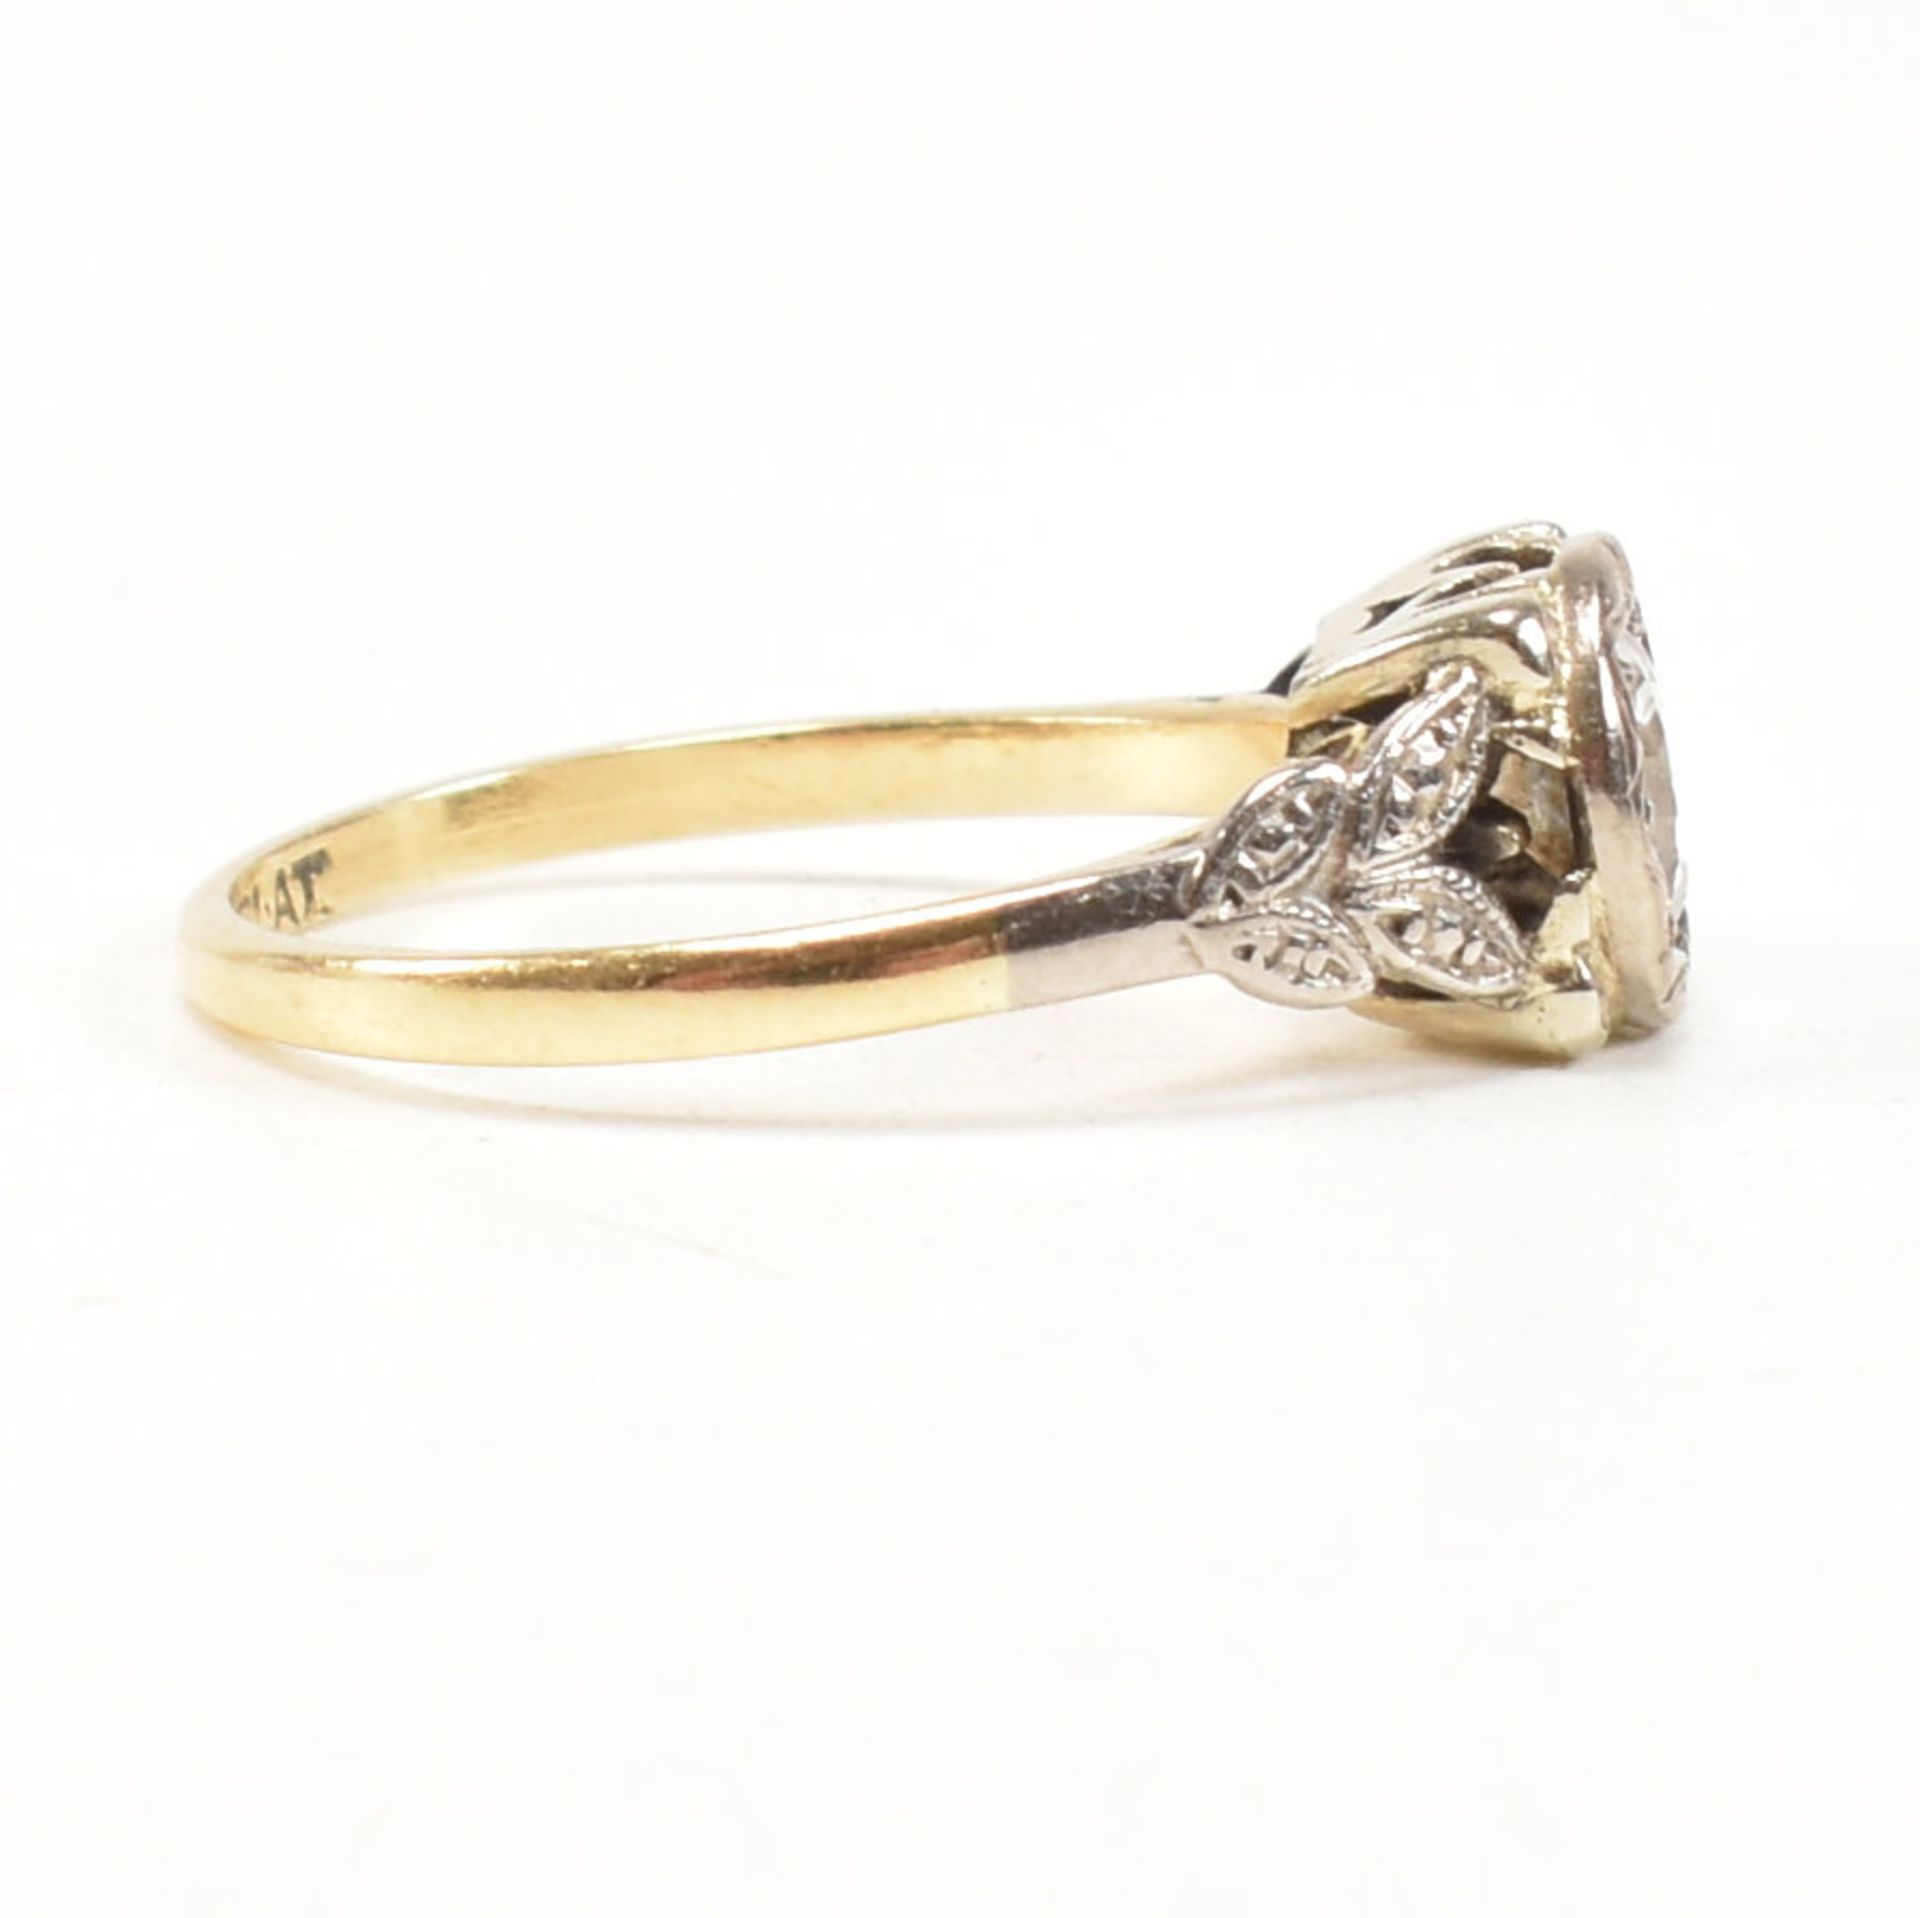 EDWARDIAN 18CT GOLD & PLATINUM DIAMOND SOLITAIRE RING - Image 2 of 8